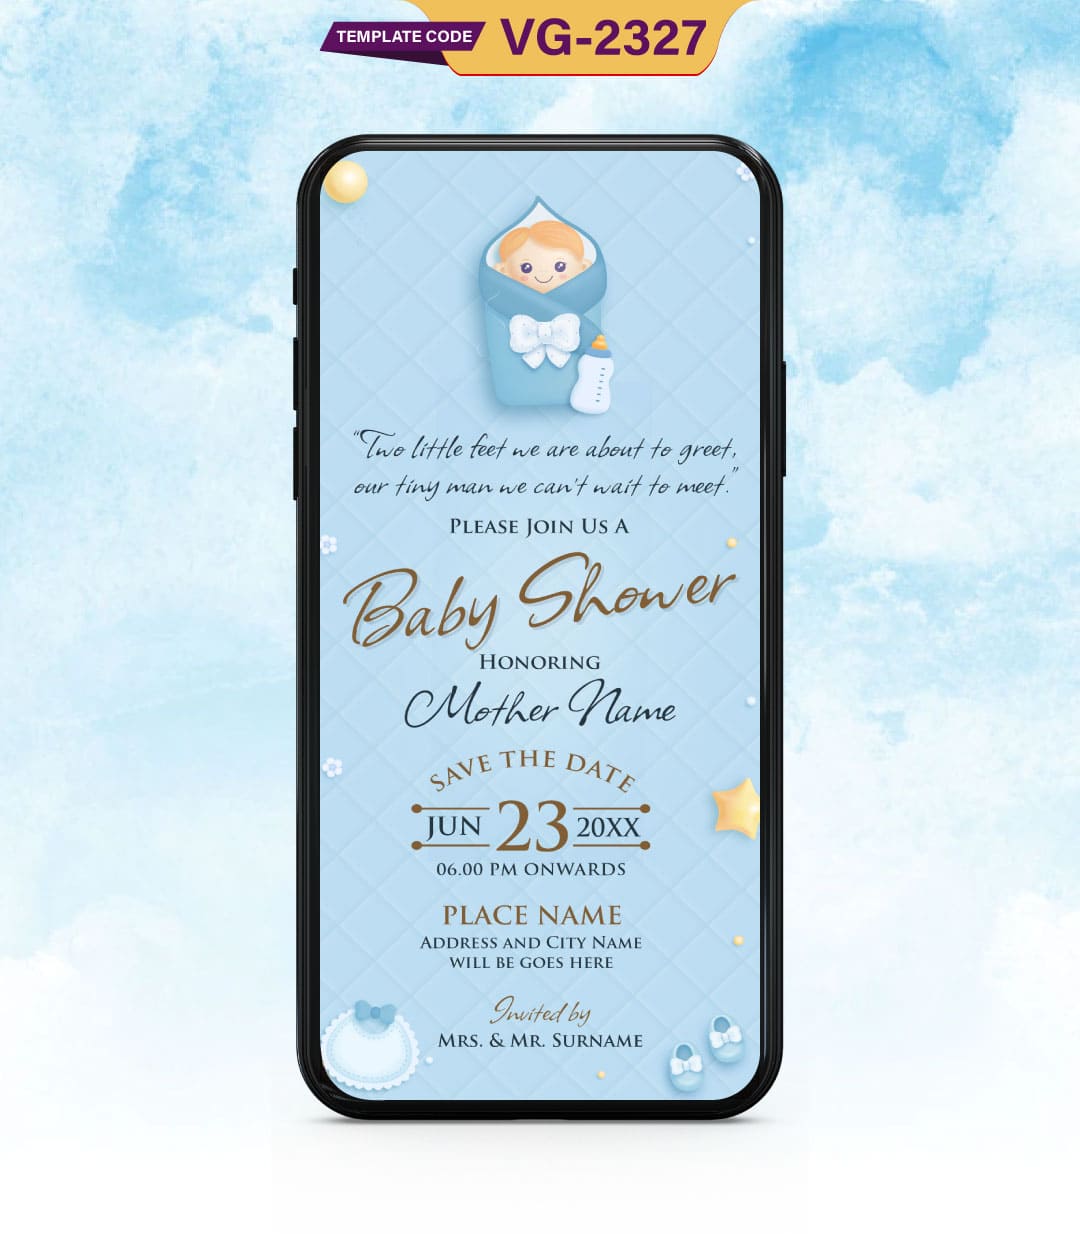 Online Baby Shower Invite Card